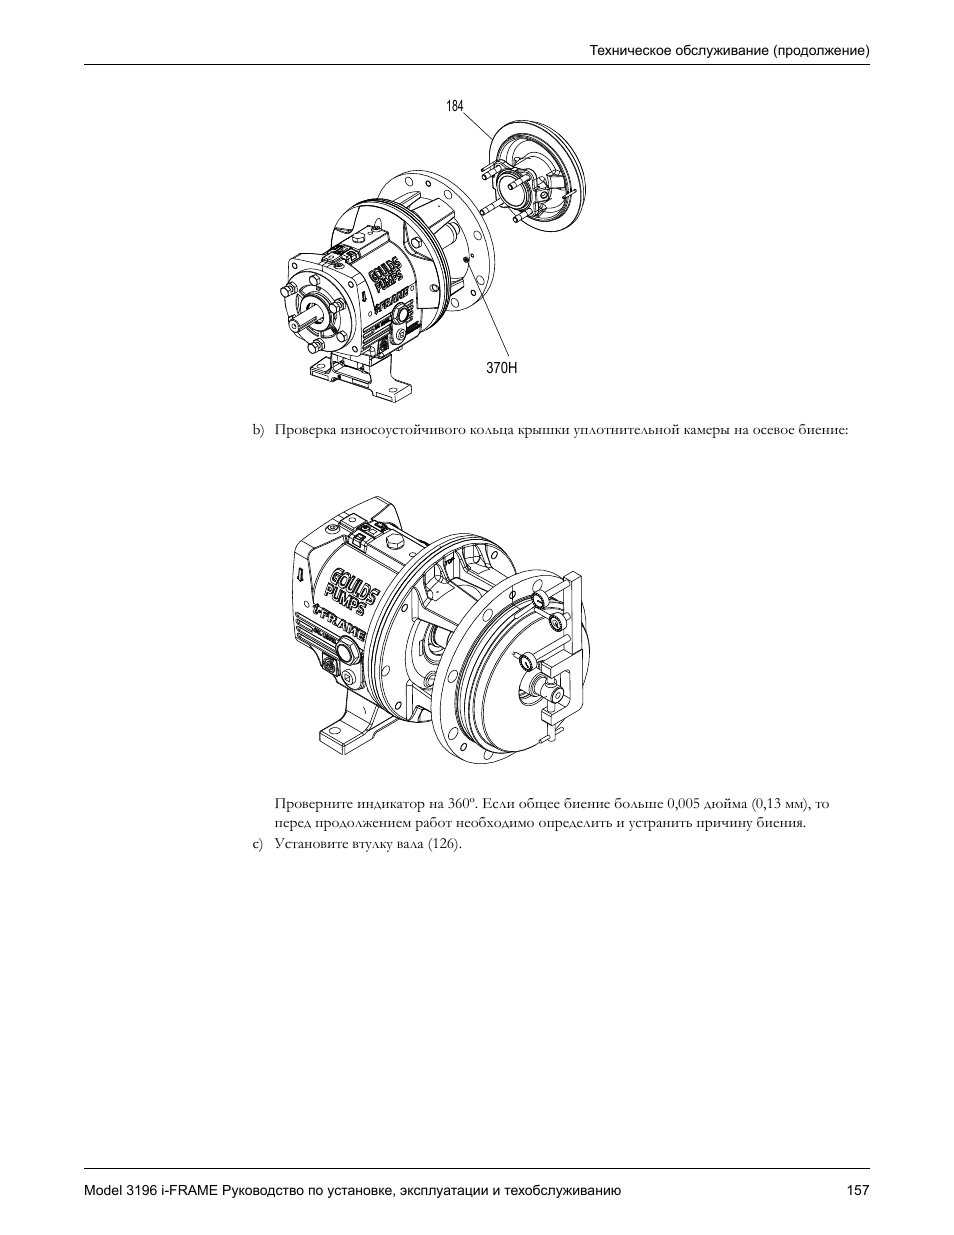 Инструкция по эксплуатации Goulds Pumps 3196 i-FRAME - IOM | Страница 159 / 212